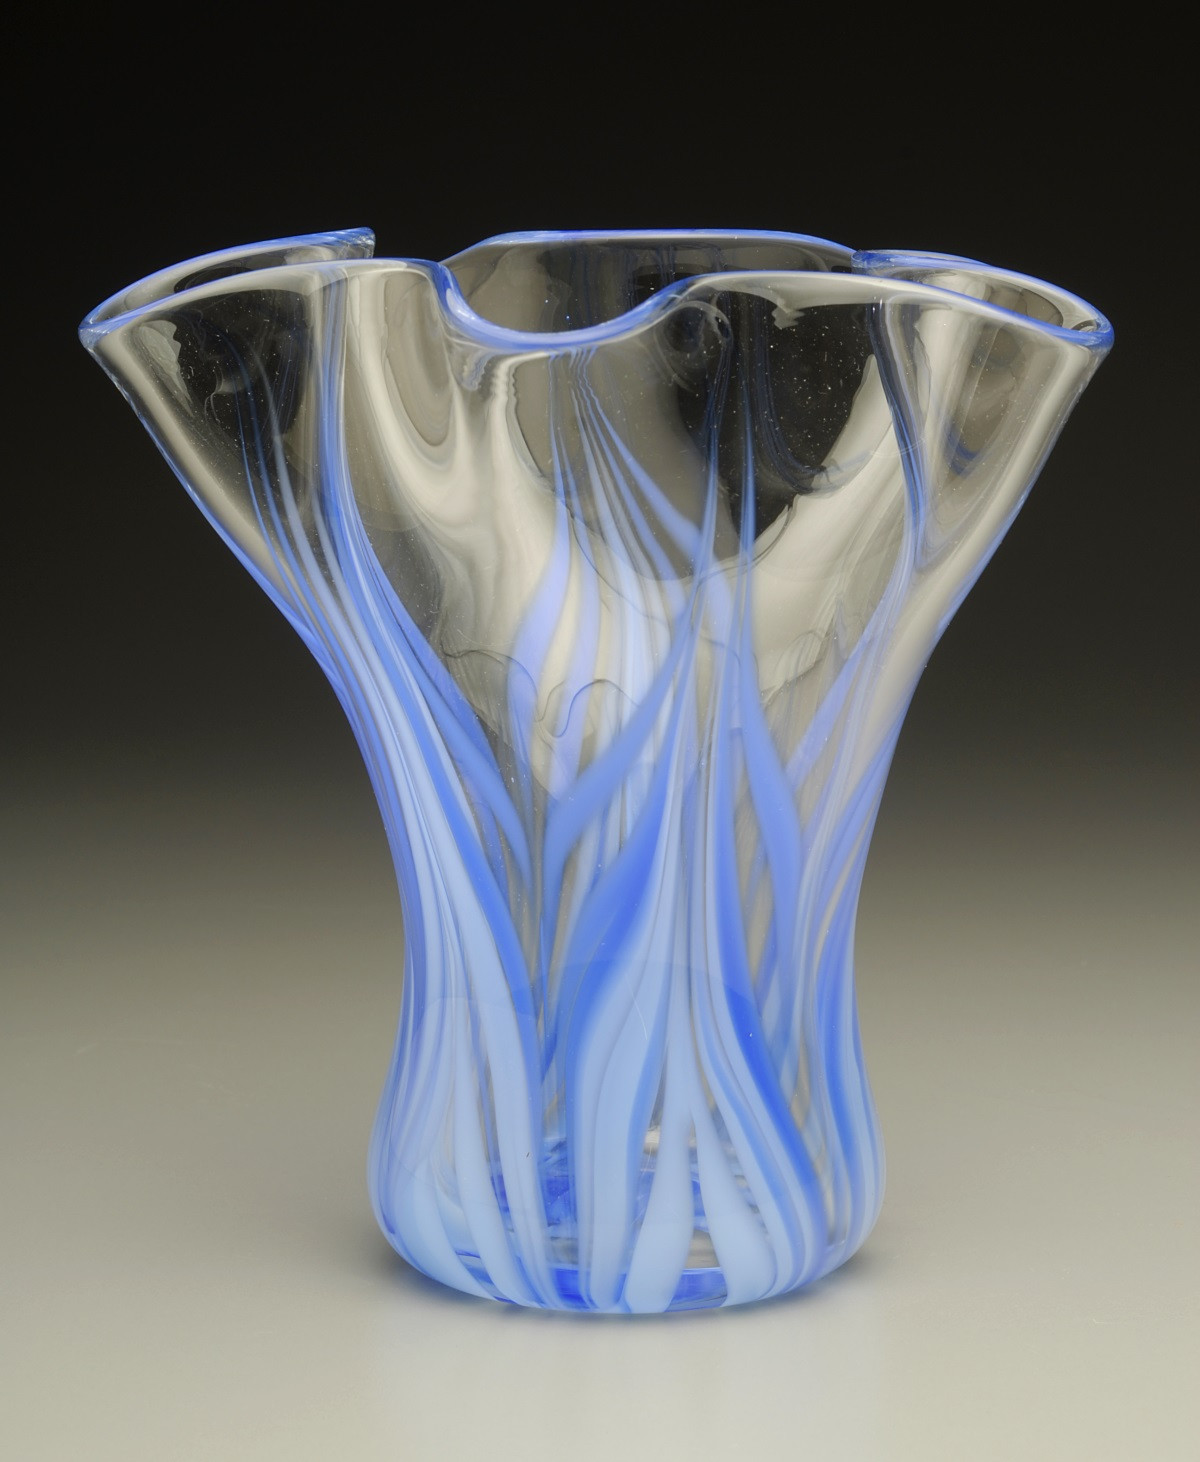 26 Fantastic Tiffany Swirl Glass Vase 2024 free download tiffany swirl glass vase of cac submissions creative arts workshop with flared vase glass 7e280b3 x 7e280b3